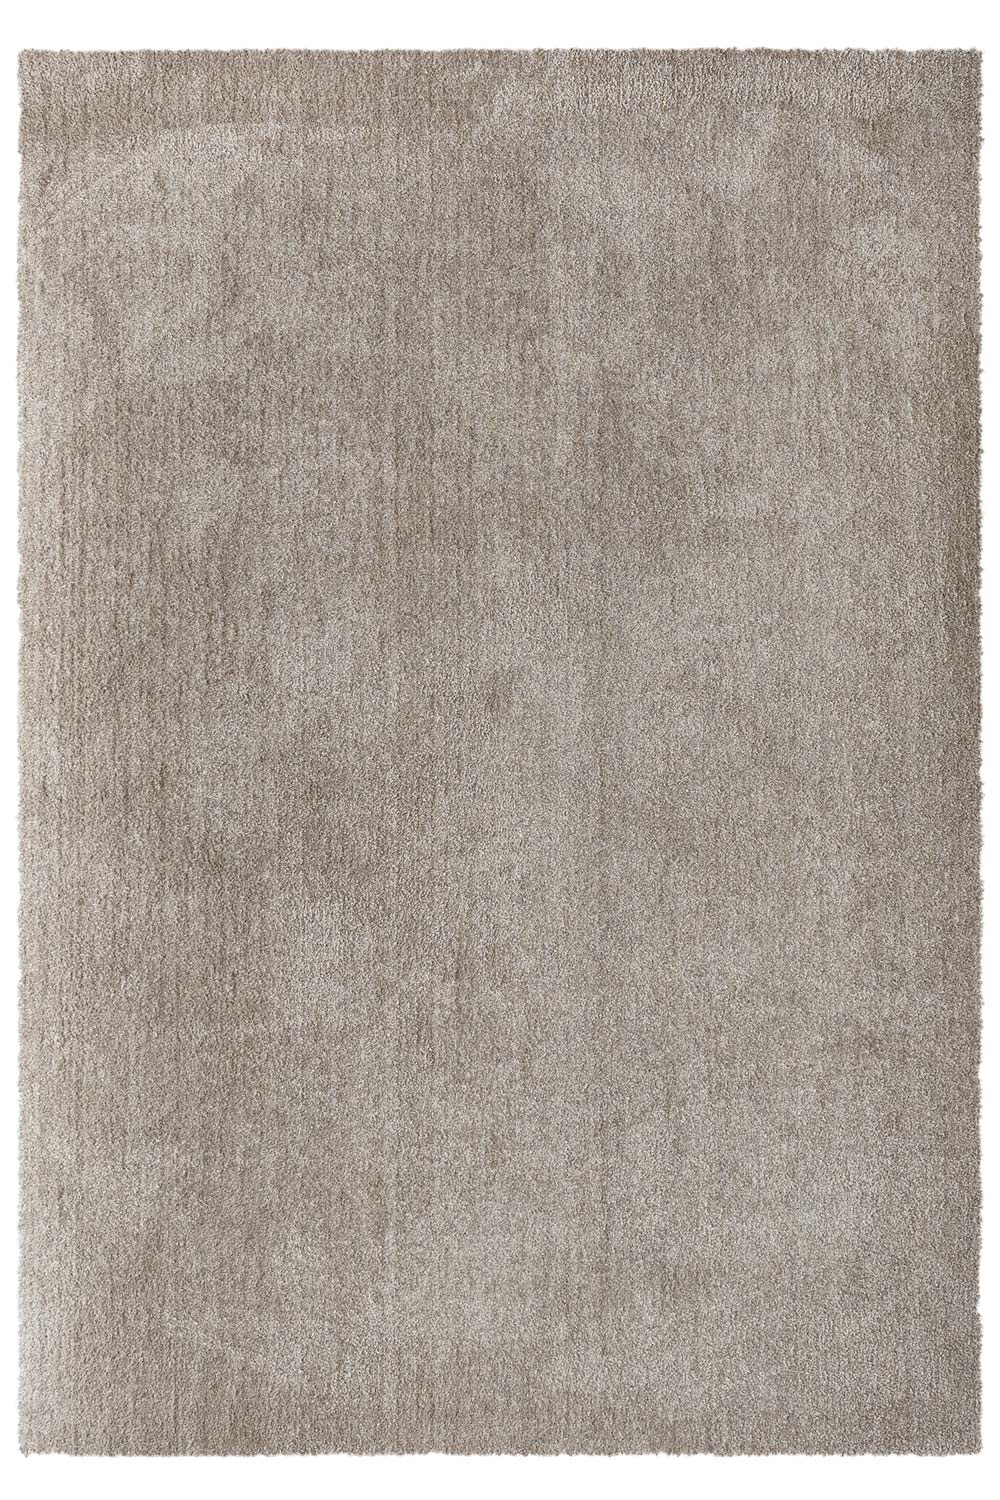 Kusový koberec Labrador 71351 050 Beige 140x200 cm